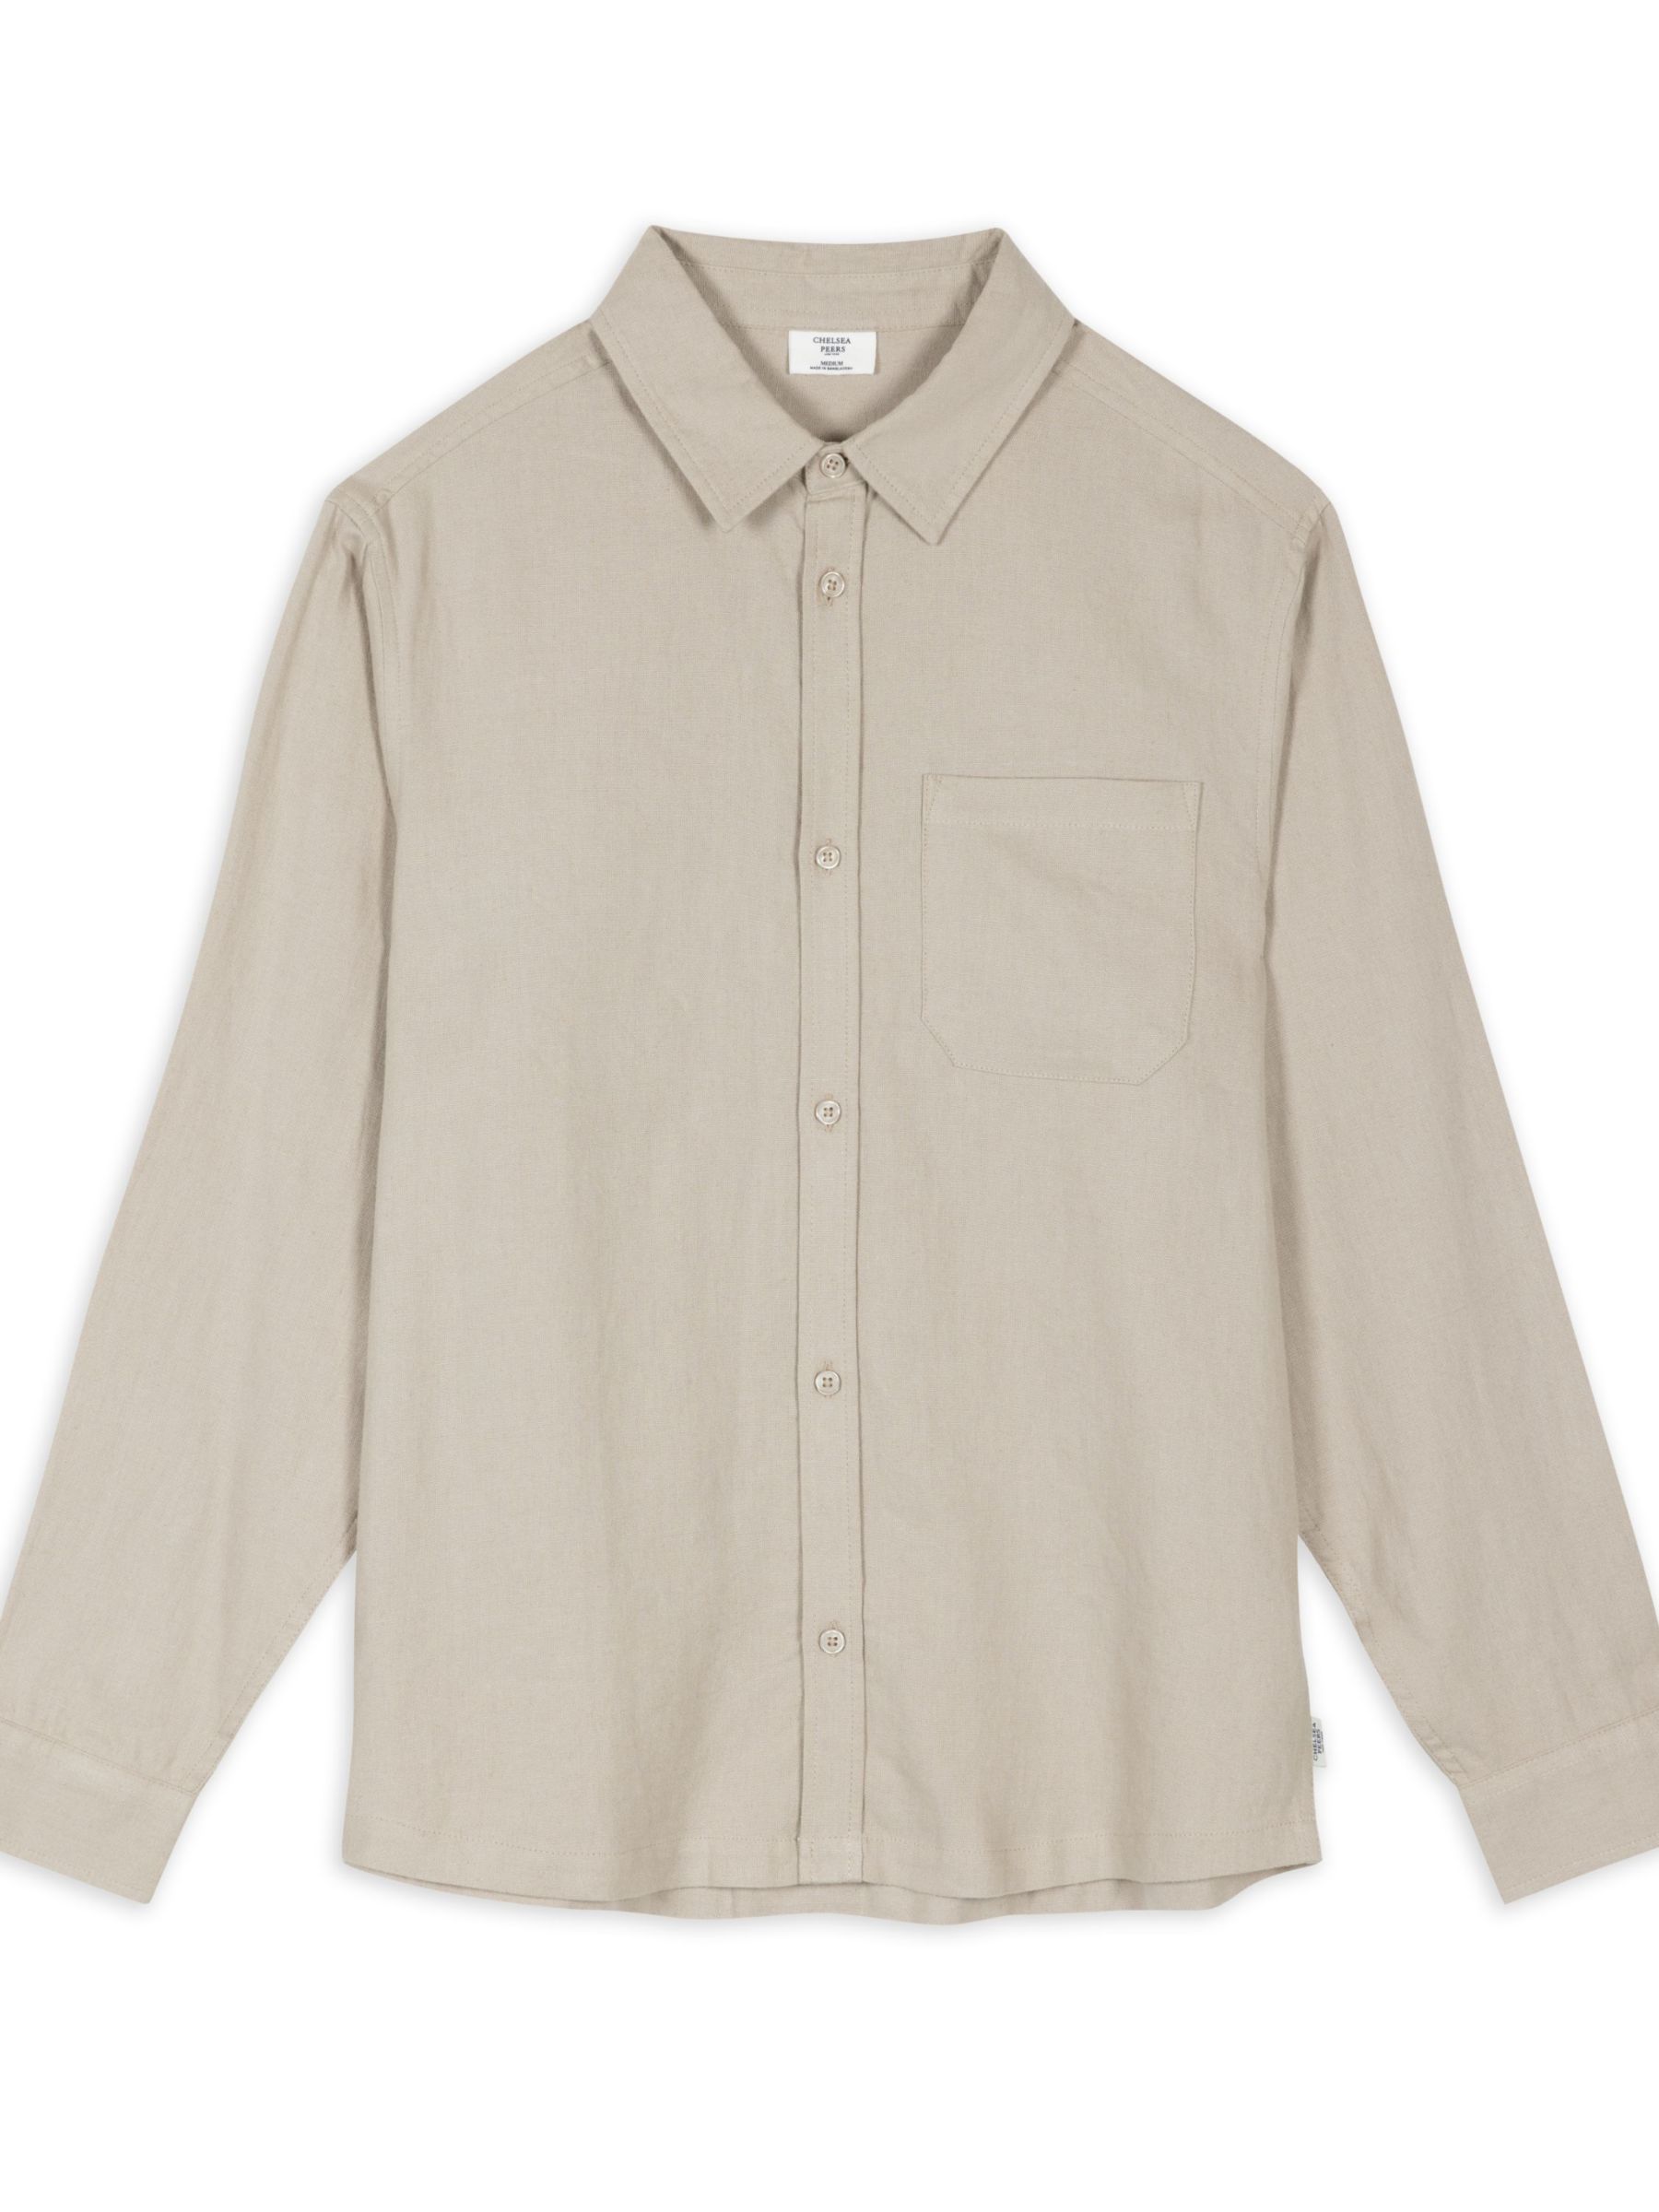 Chelsea Peers Linen Blend Long Sleeve Shirt, Camel, L